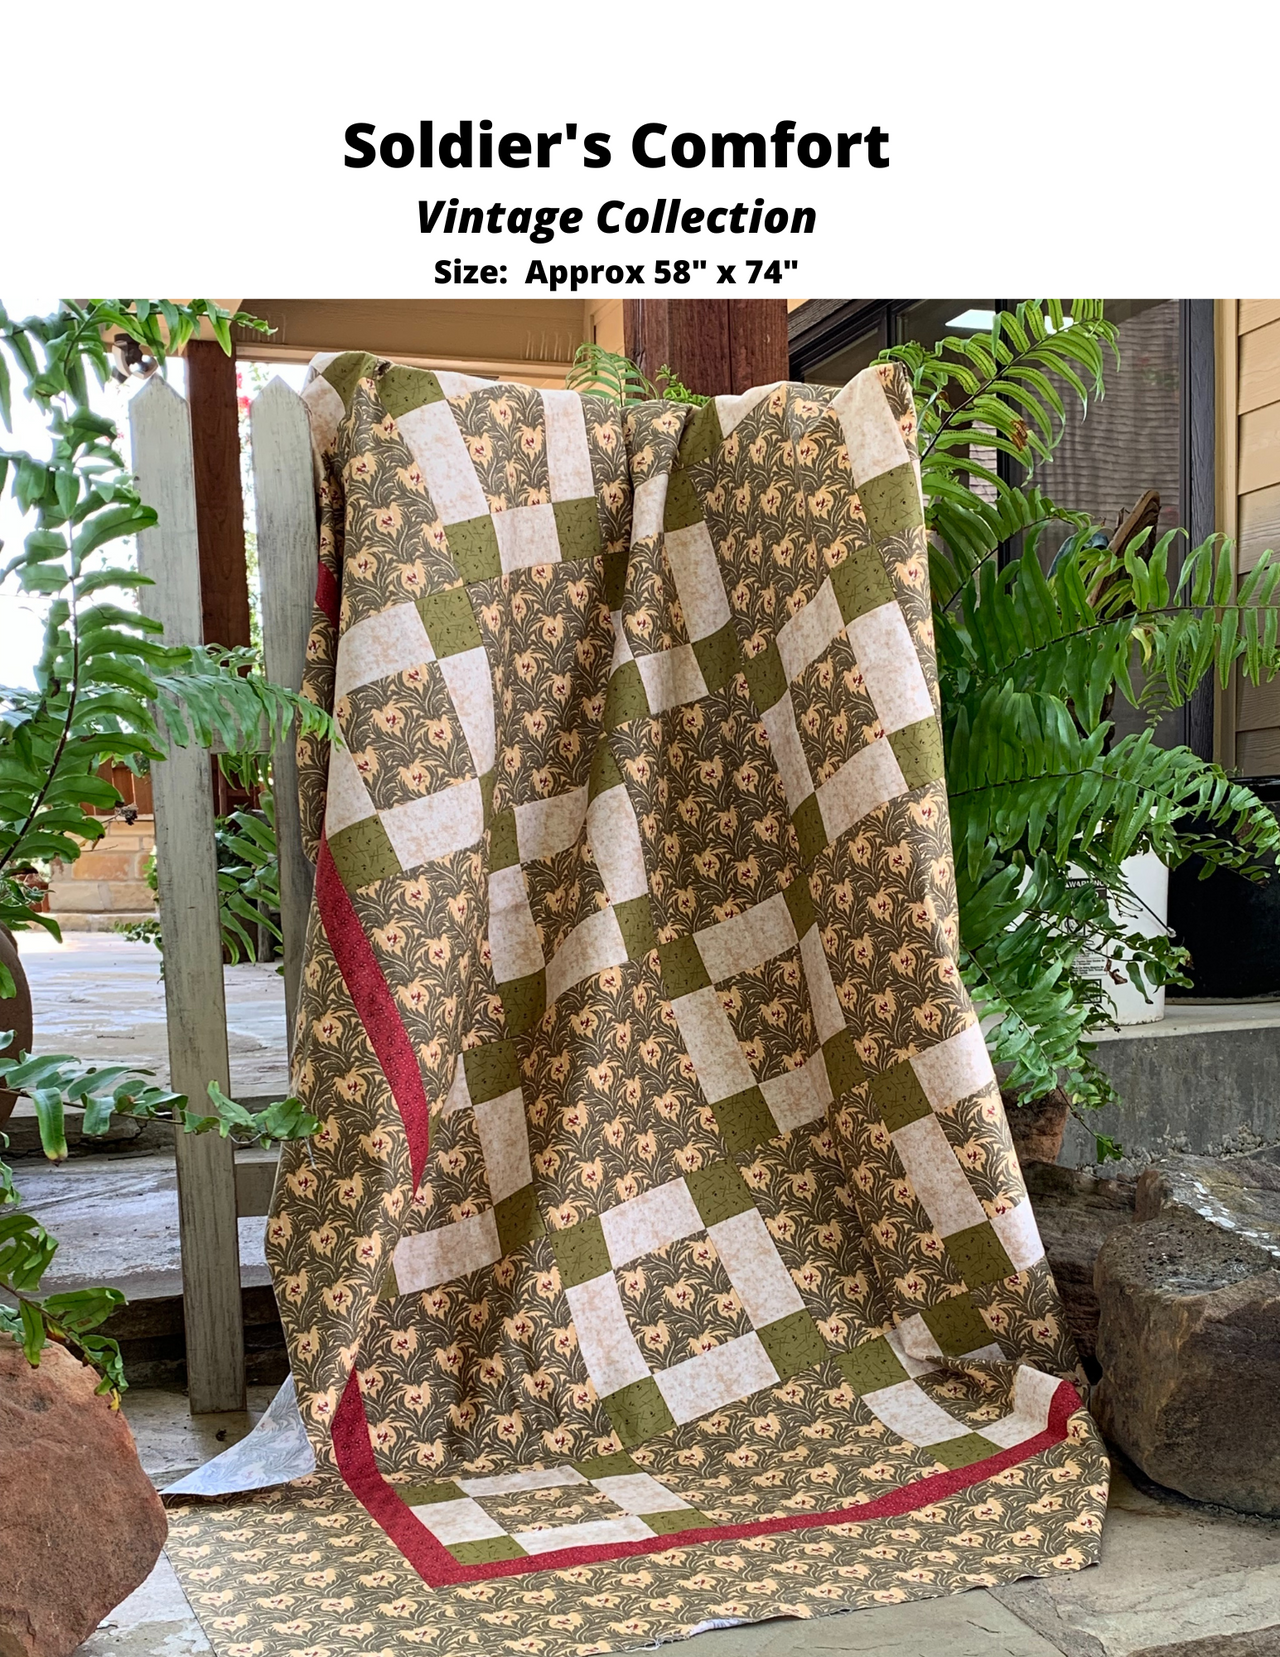 Soldier's Comfort Fabric Kit - Choose Vintage or Paradise kit or pattern